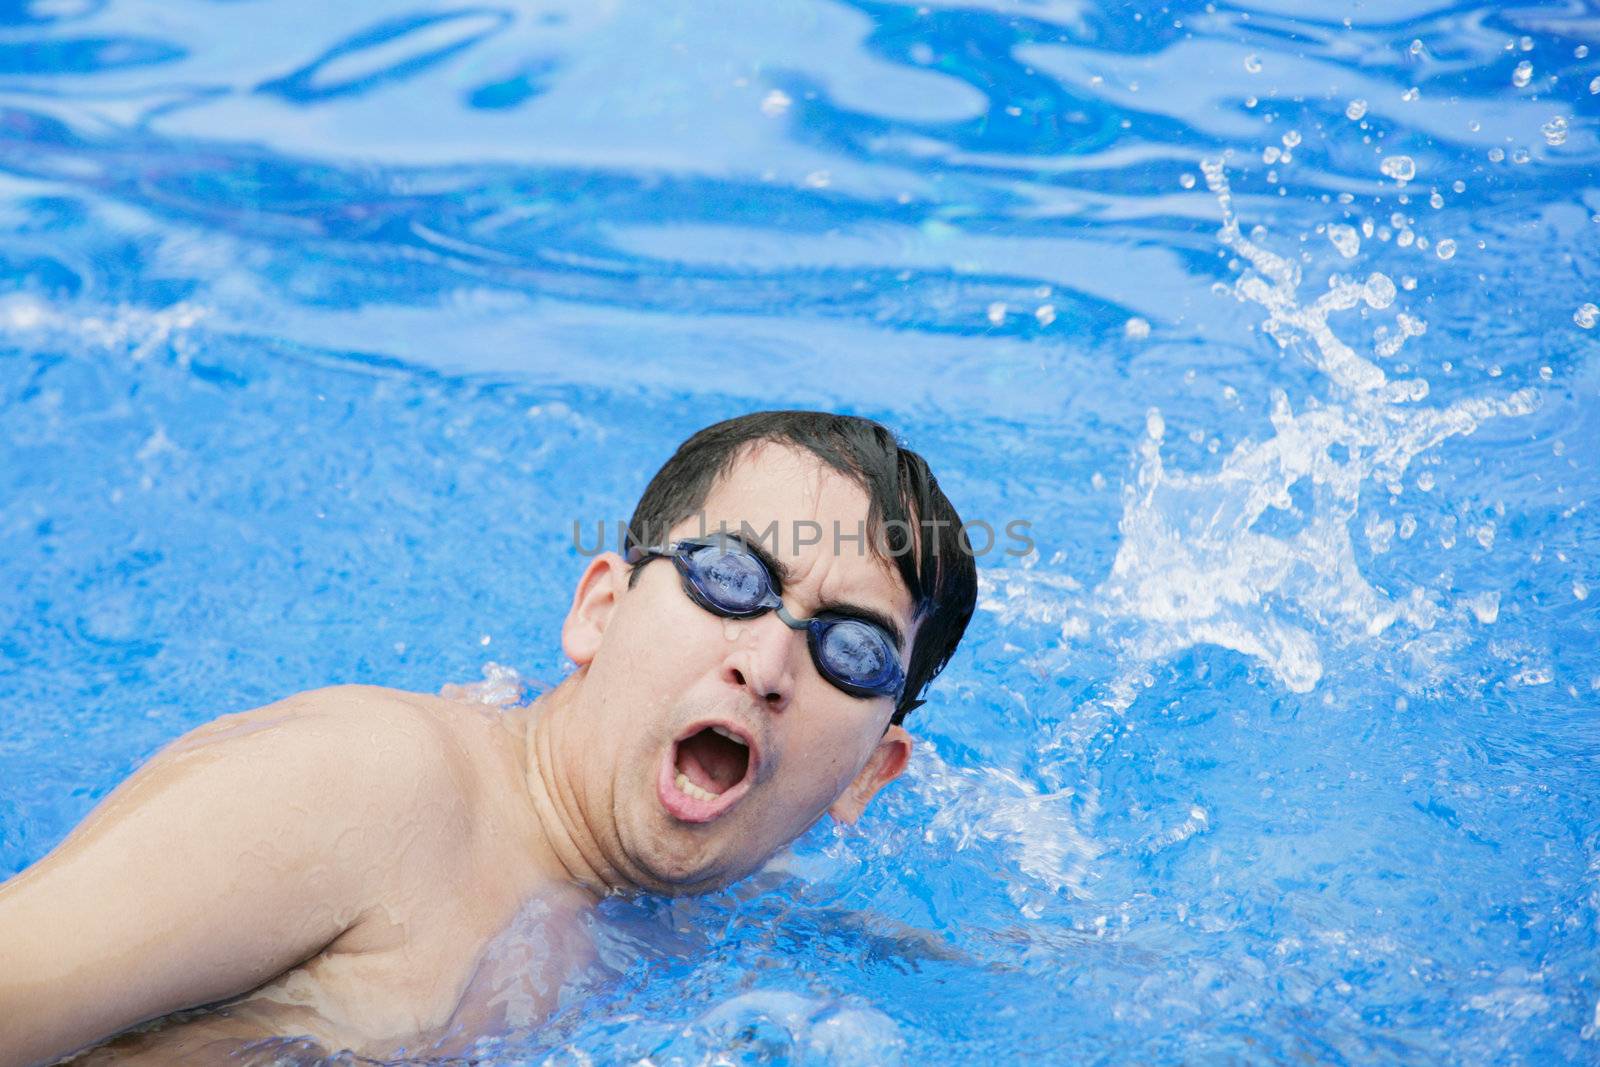 Swimmer breathing performing the crawl stroke by dacasdo